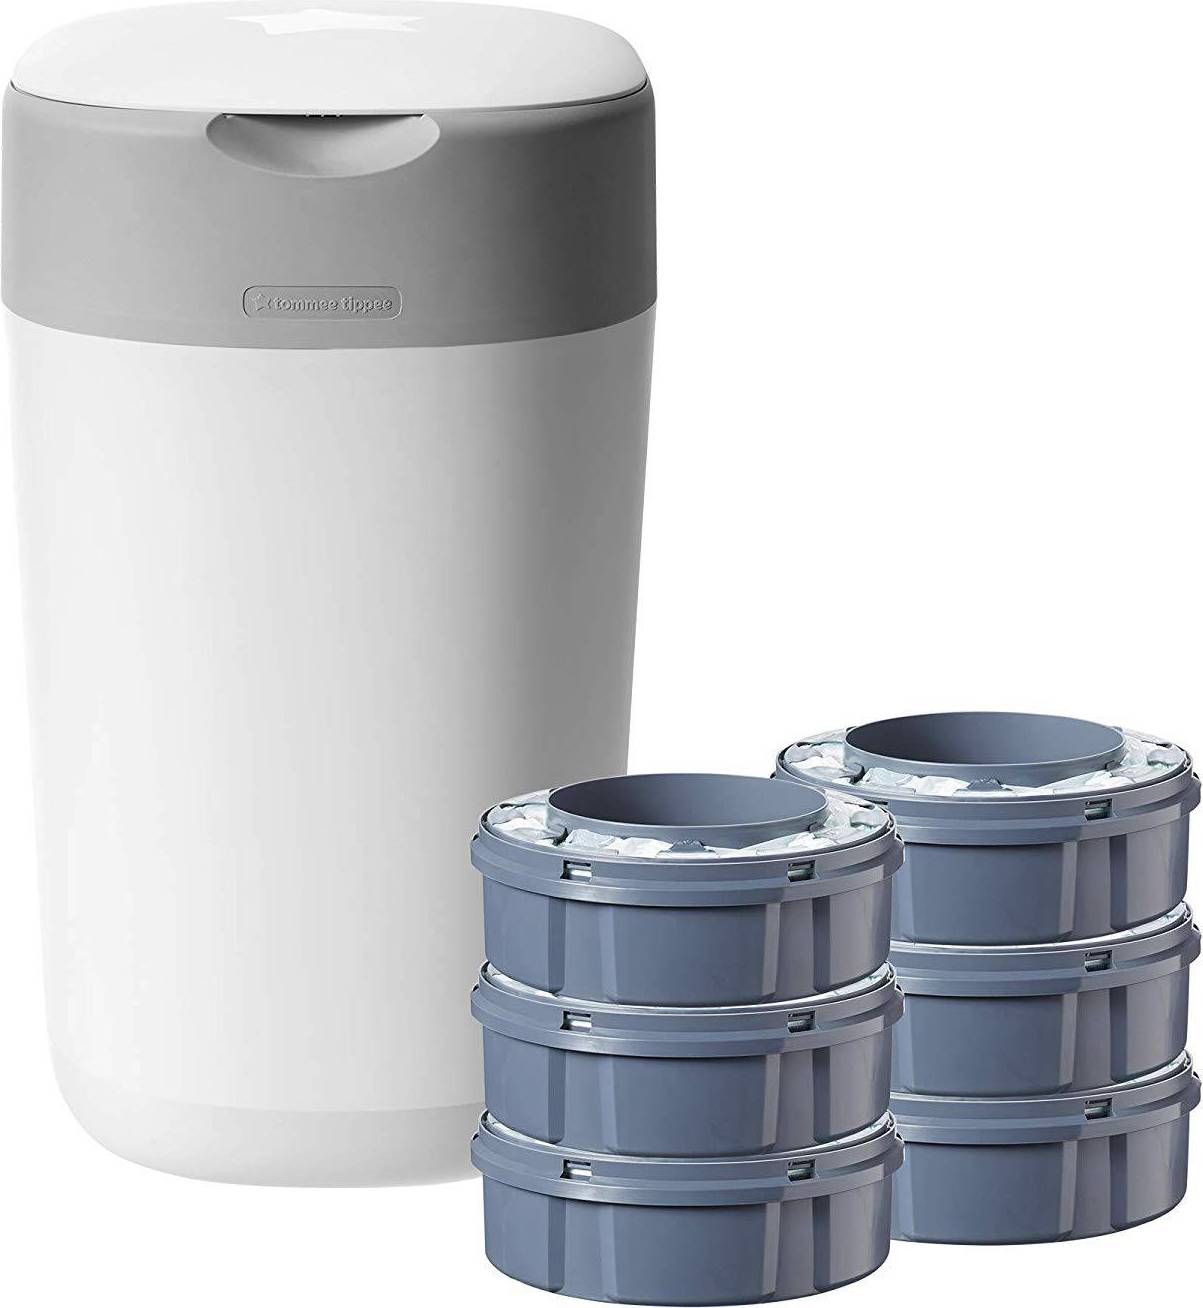  Bild på Tommee Tippee Twist & Click Nappy Disposal System with 6 Refills blöjhink